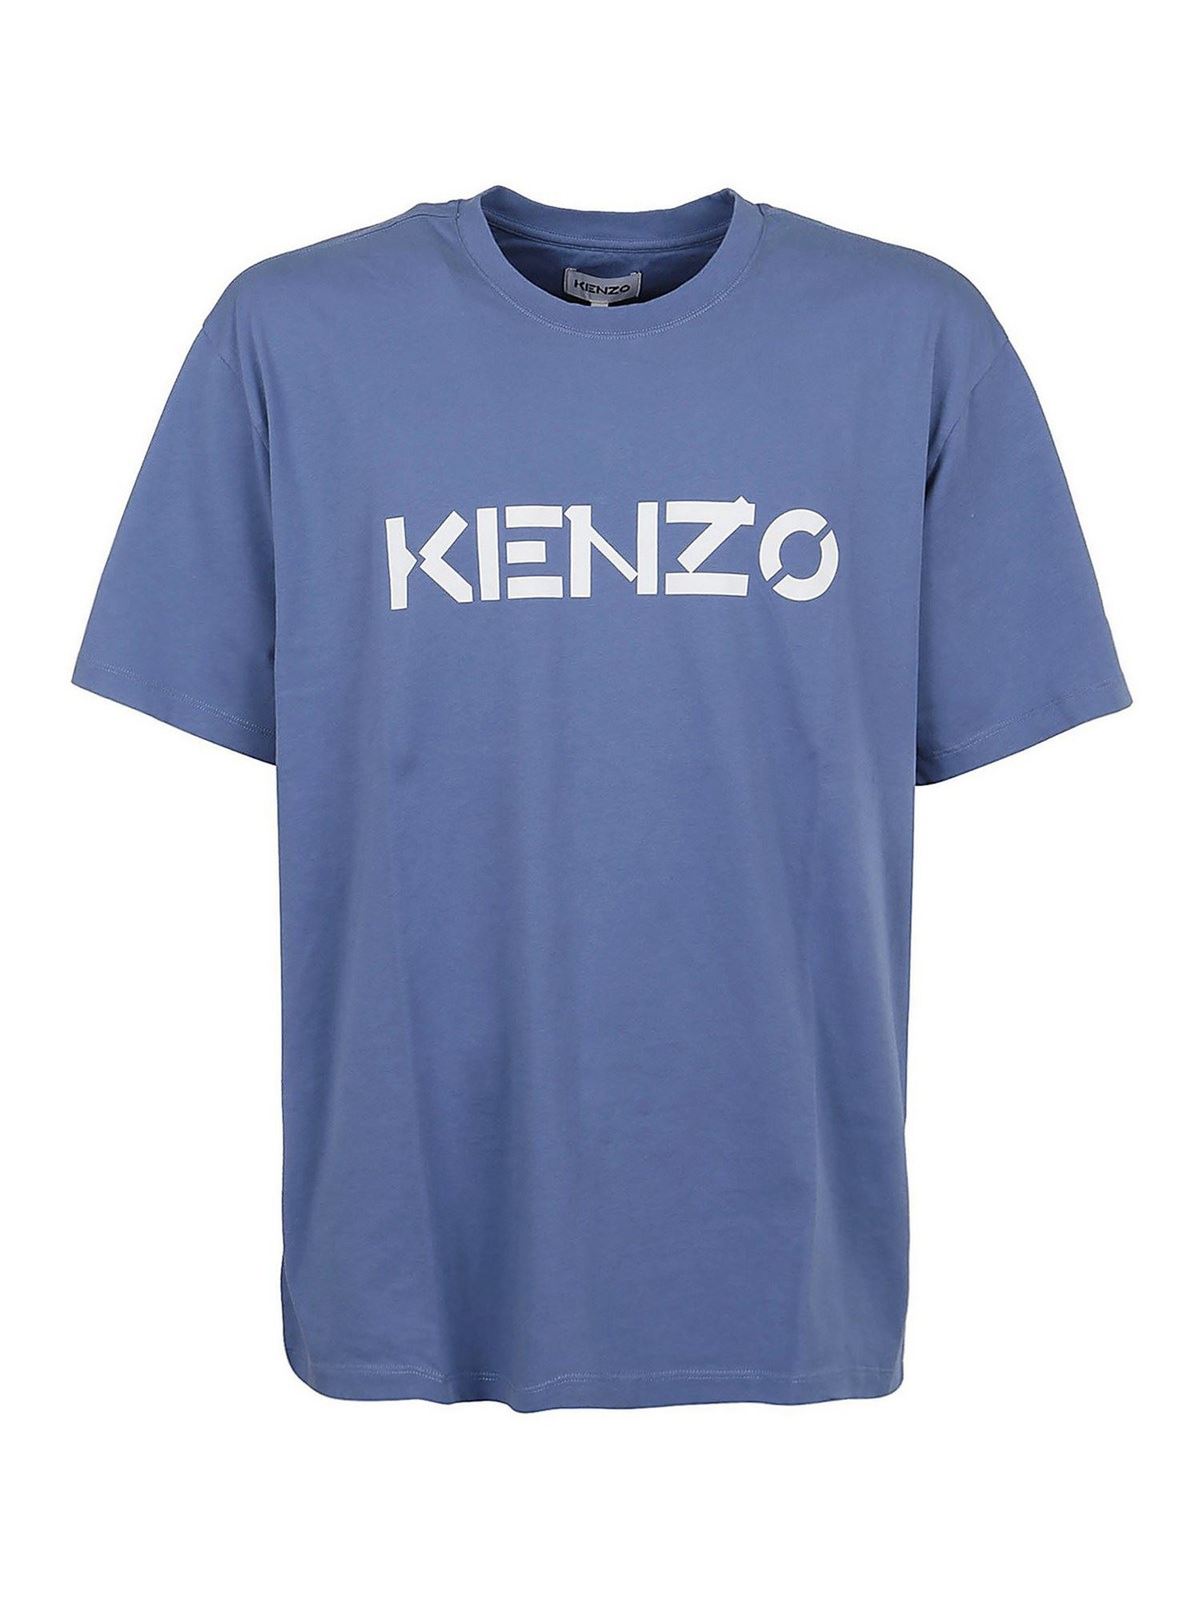 kenzo blue top